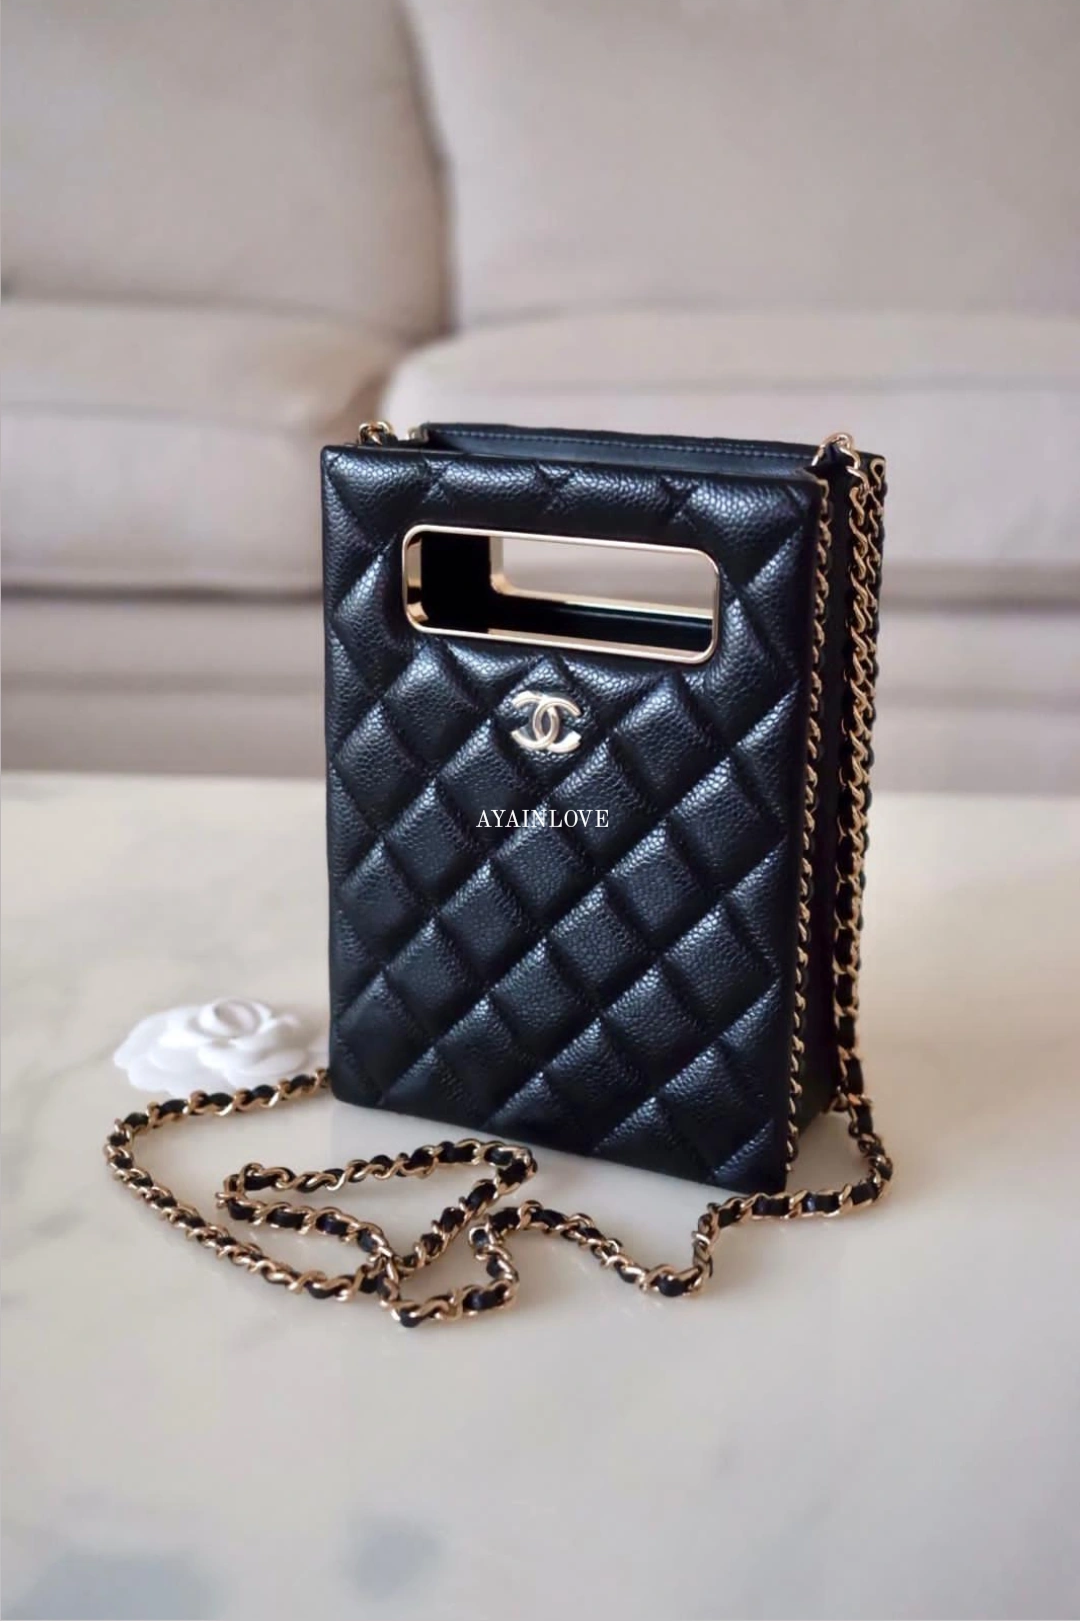 New Chanel classic mini Chain Clutch Rect black caviar gold hw Bag W Receipt